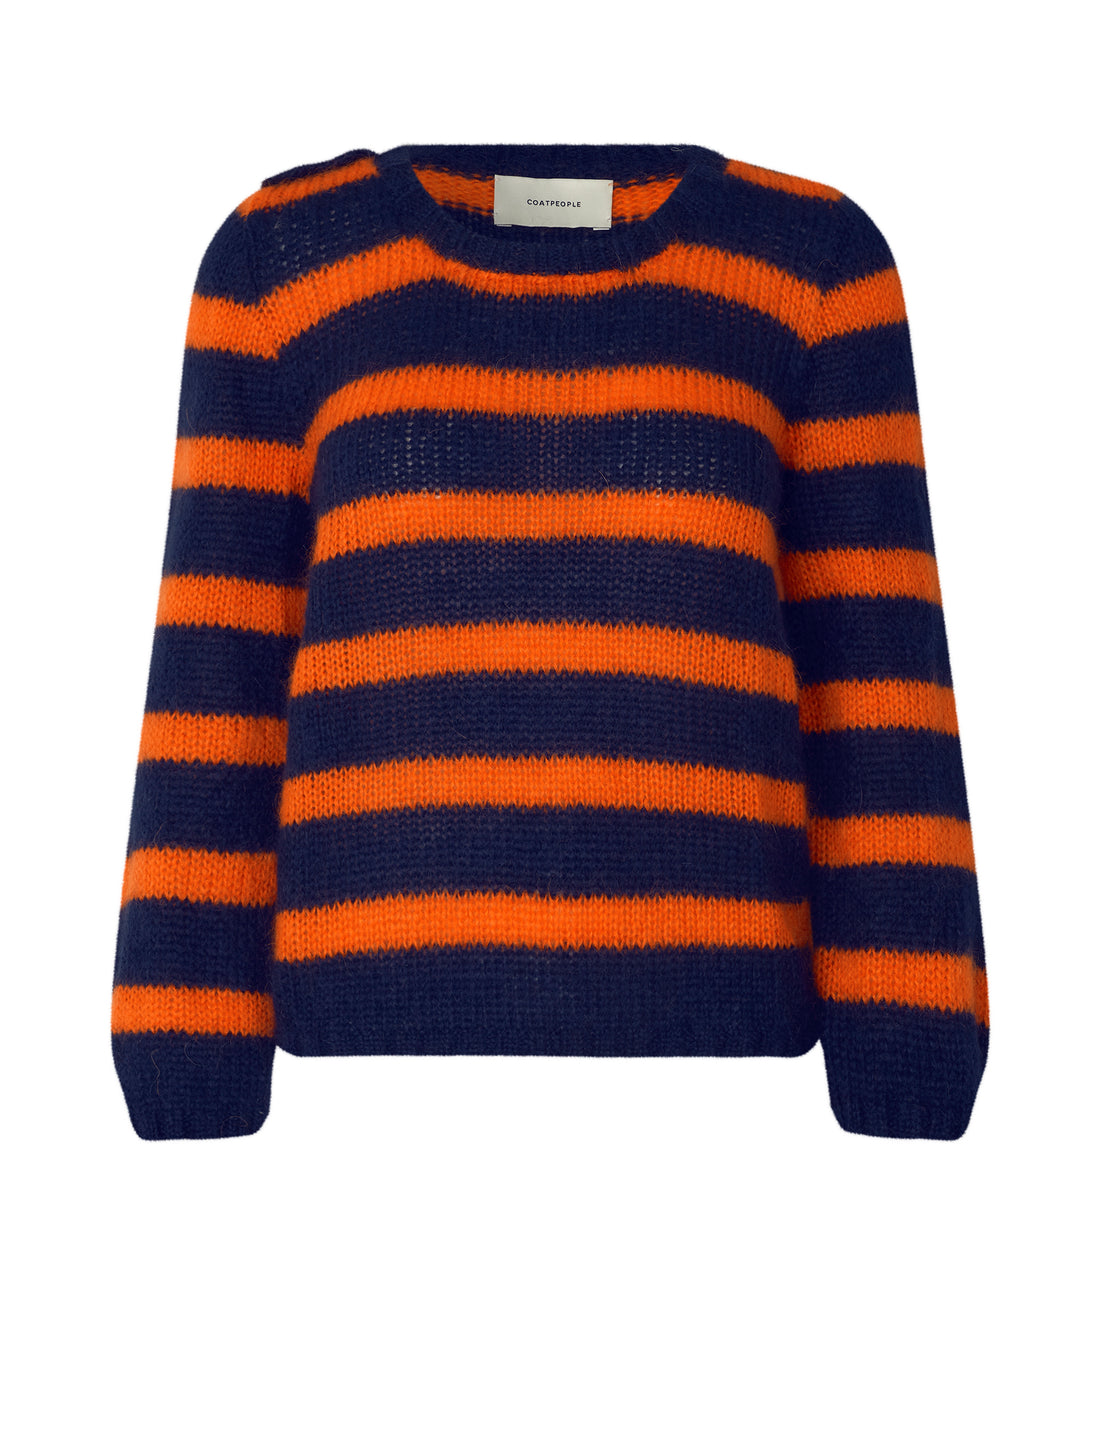 Norma knit navy/orange